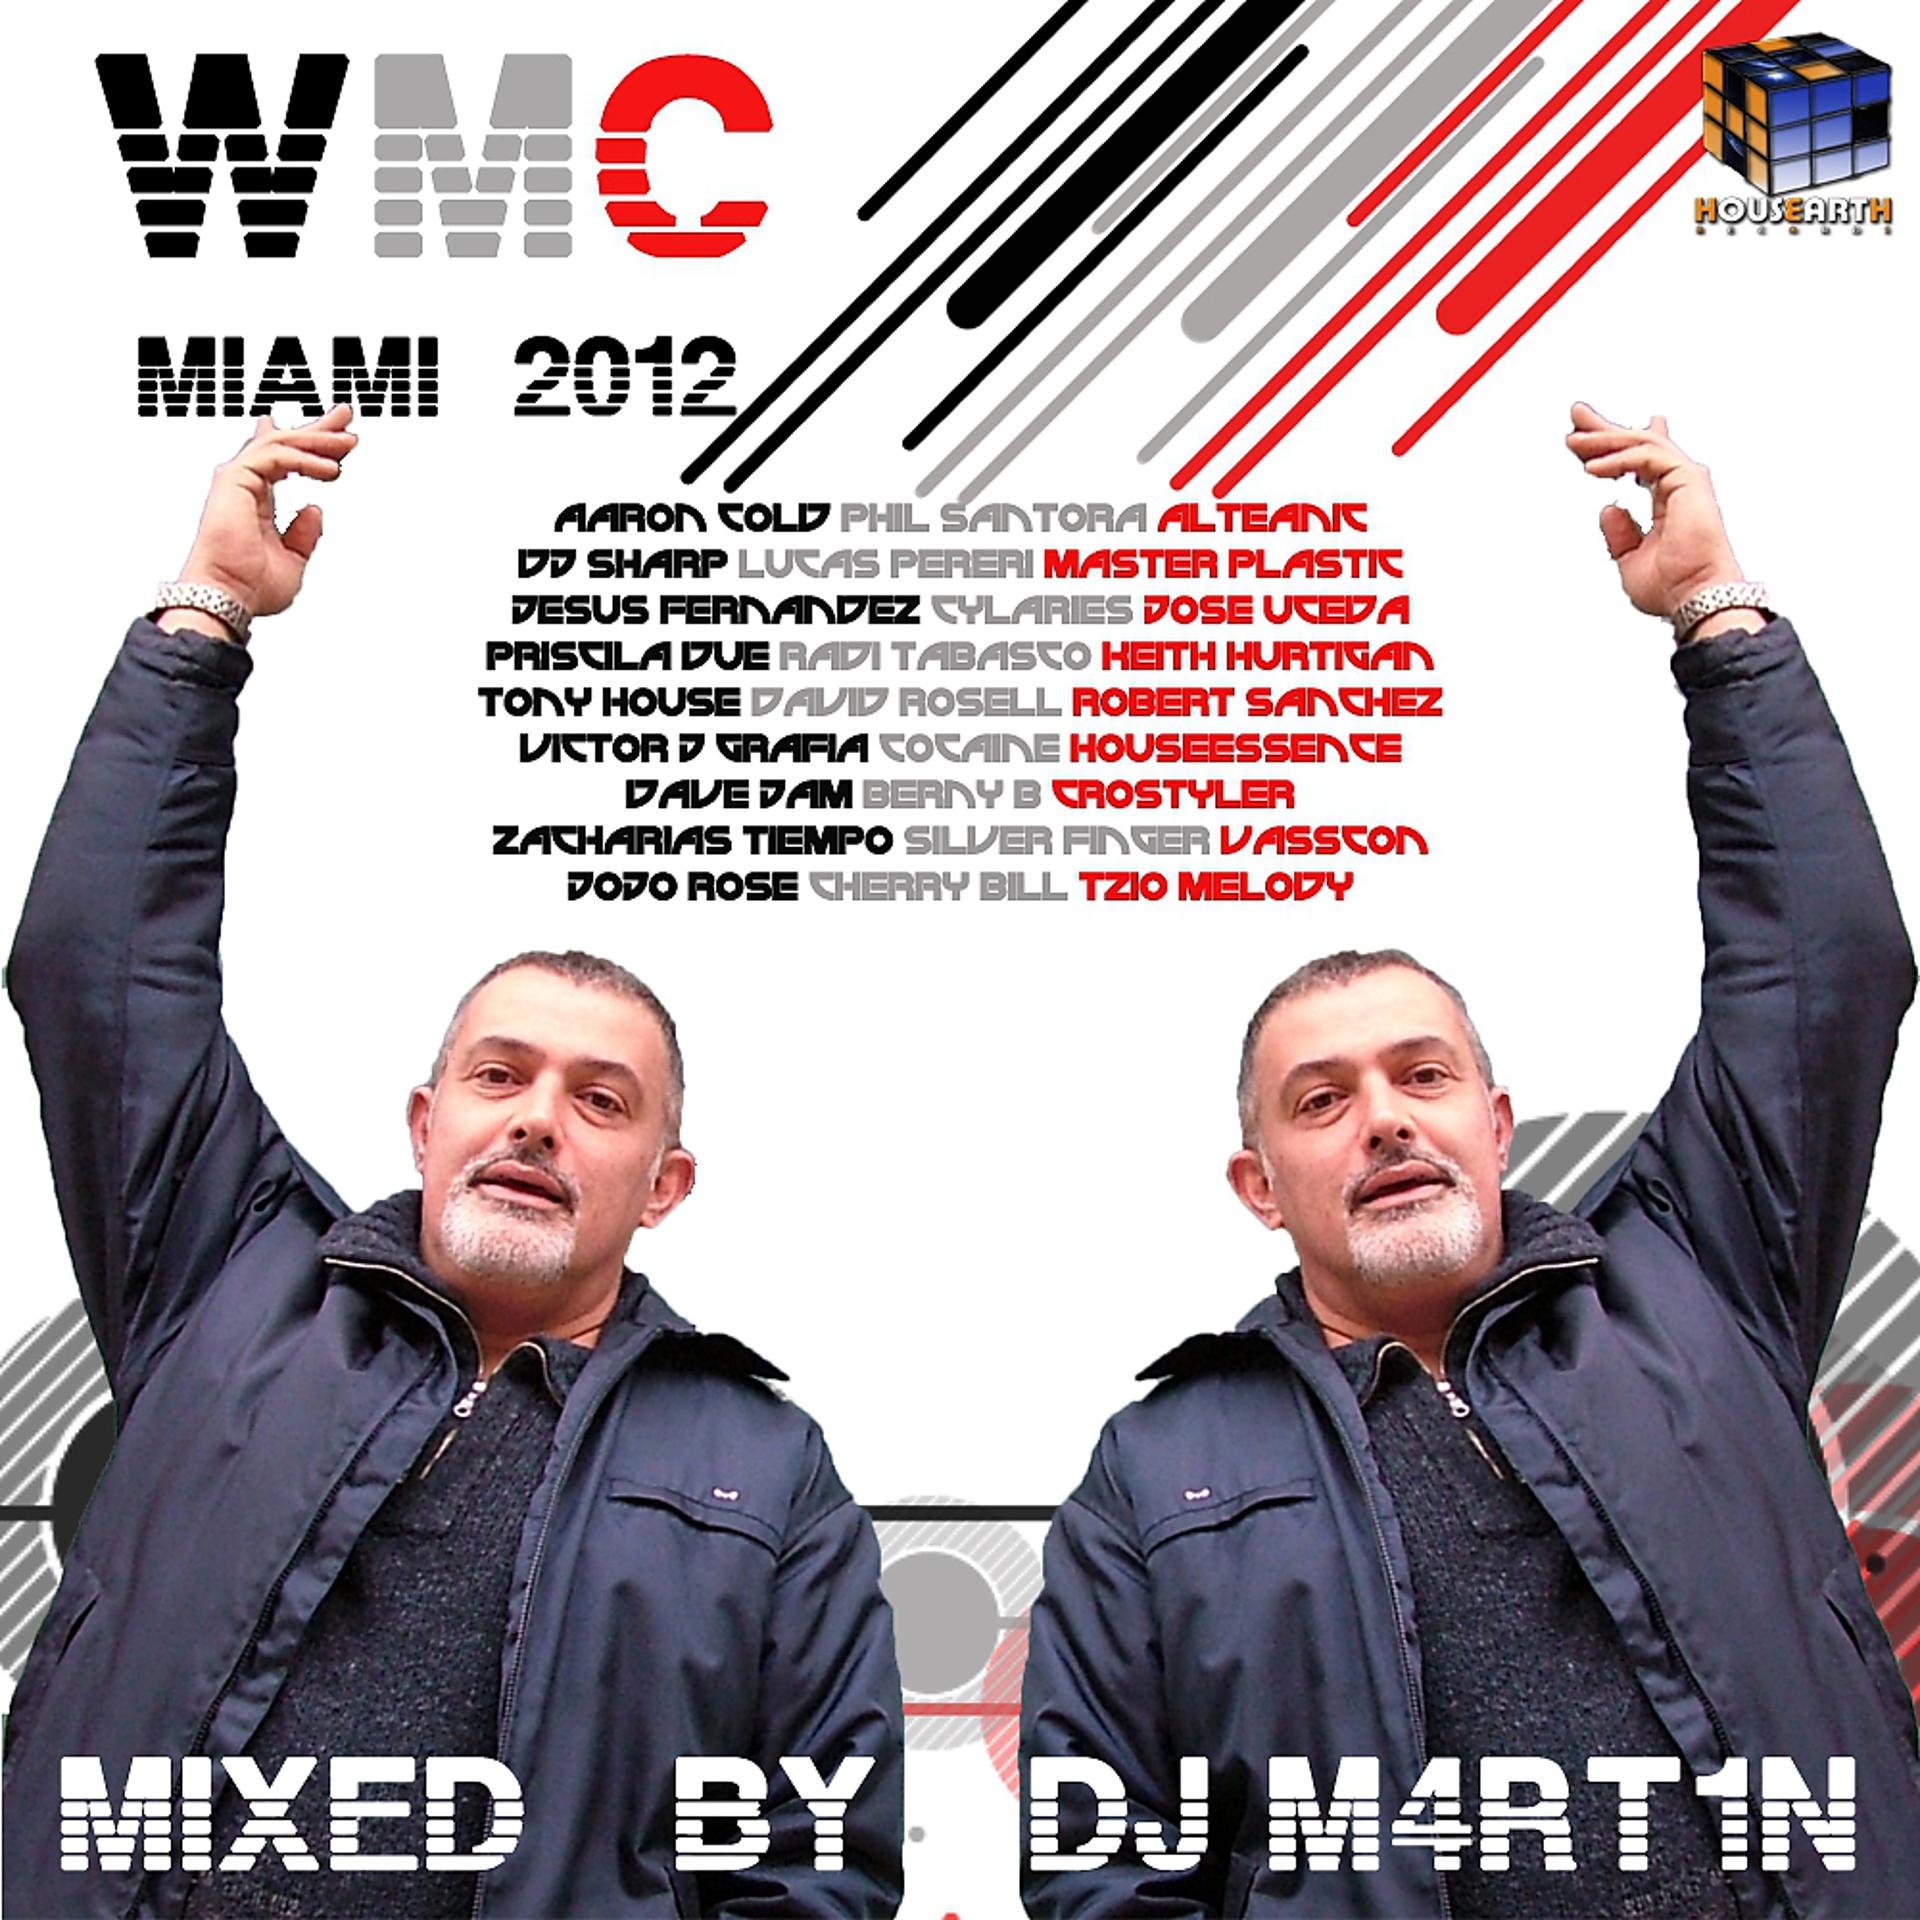 Постер альбома Housearth Records WMC Miami 2012 (Mixed by DJ M4rt1n)